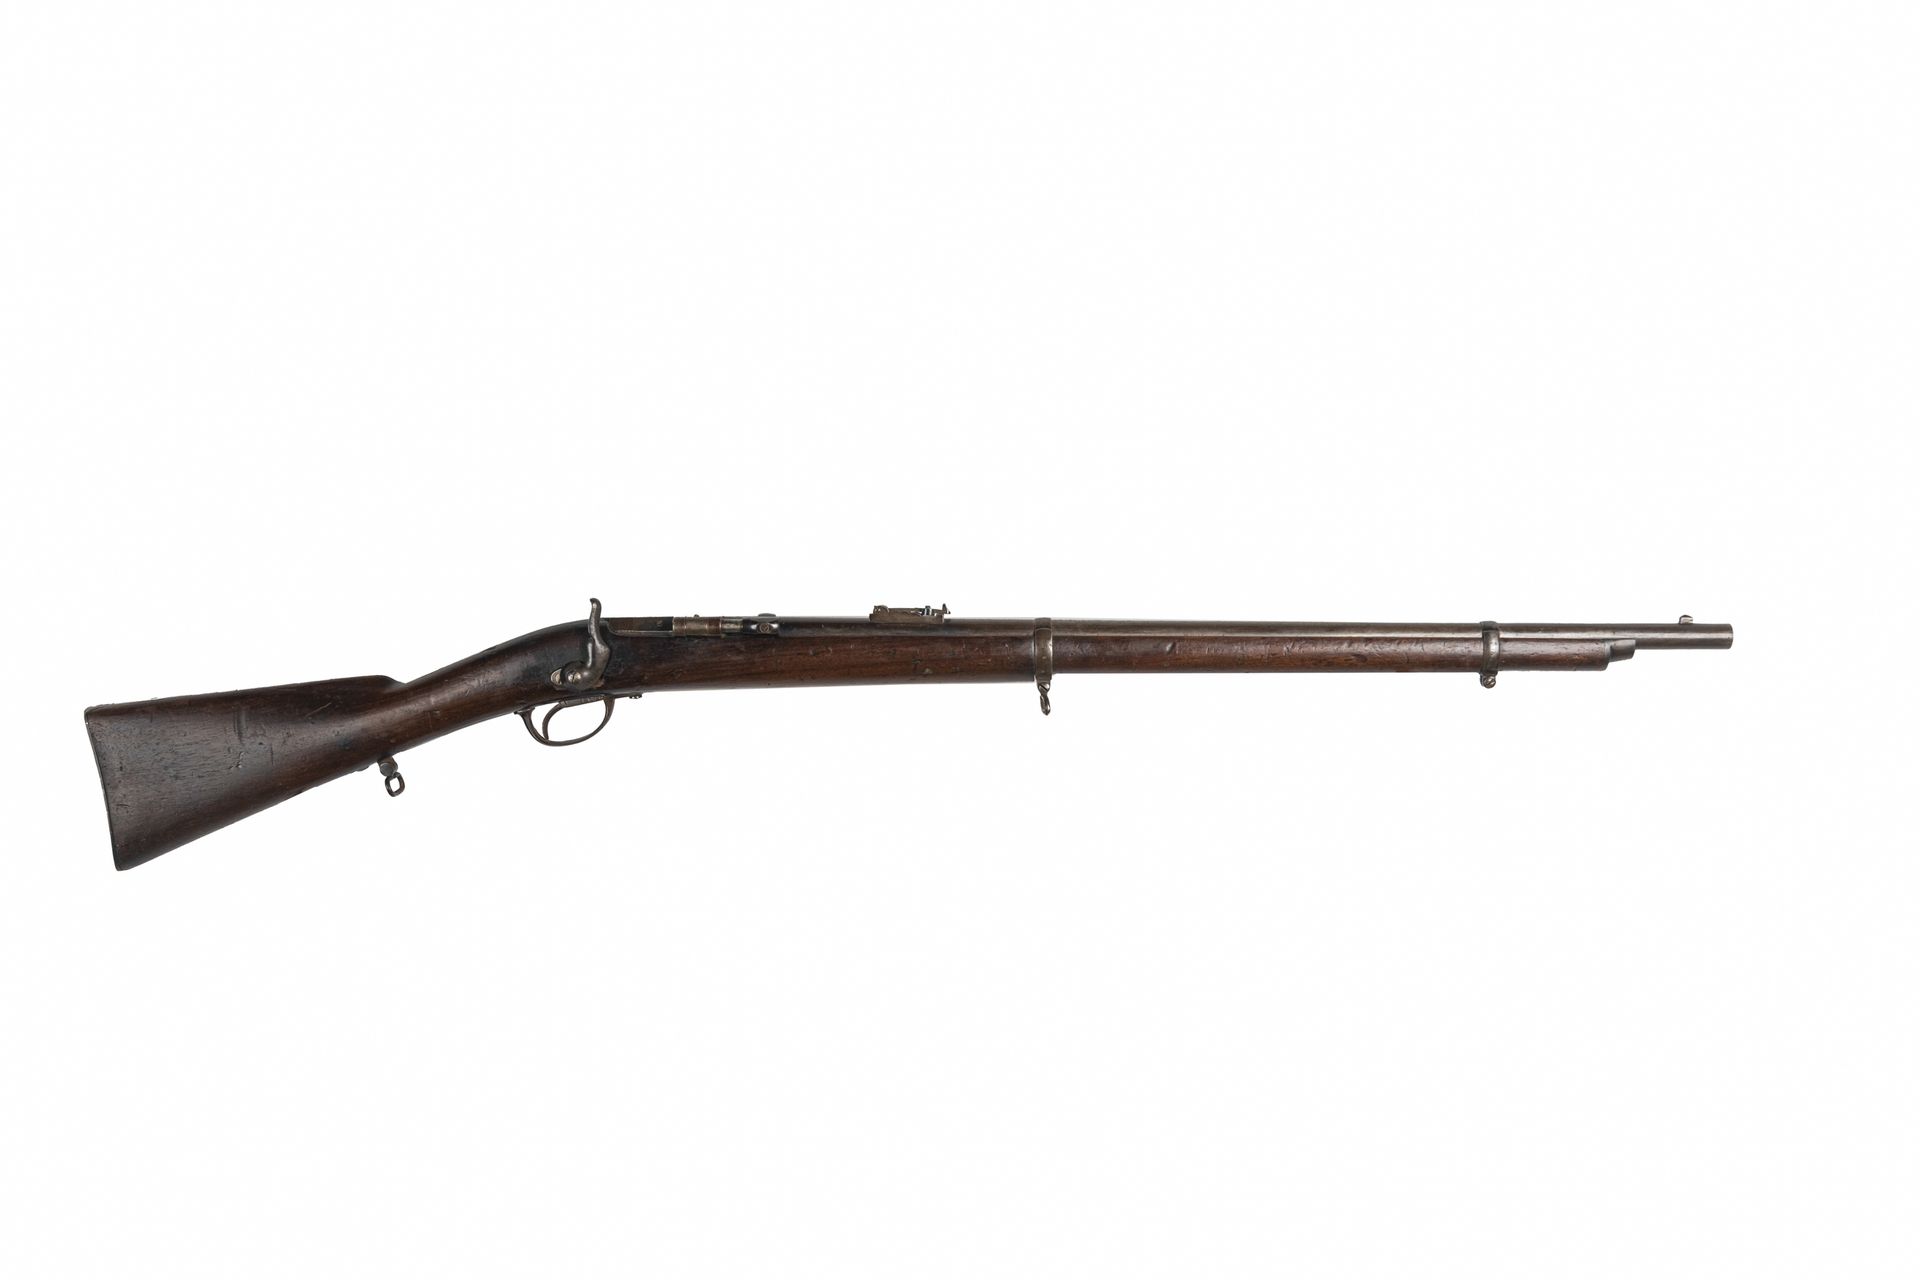 Null 西班牙鼻烟壶步枪。

圆桶，古铜色，有上升。枪托上印有 "J.YBARRA 1867"。

右侧的军备锤。抛光的铁配件。

胡桃木股票。

枪管长度：&hellip;